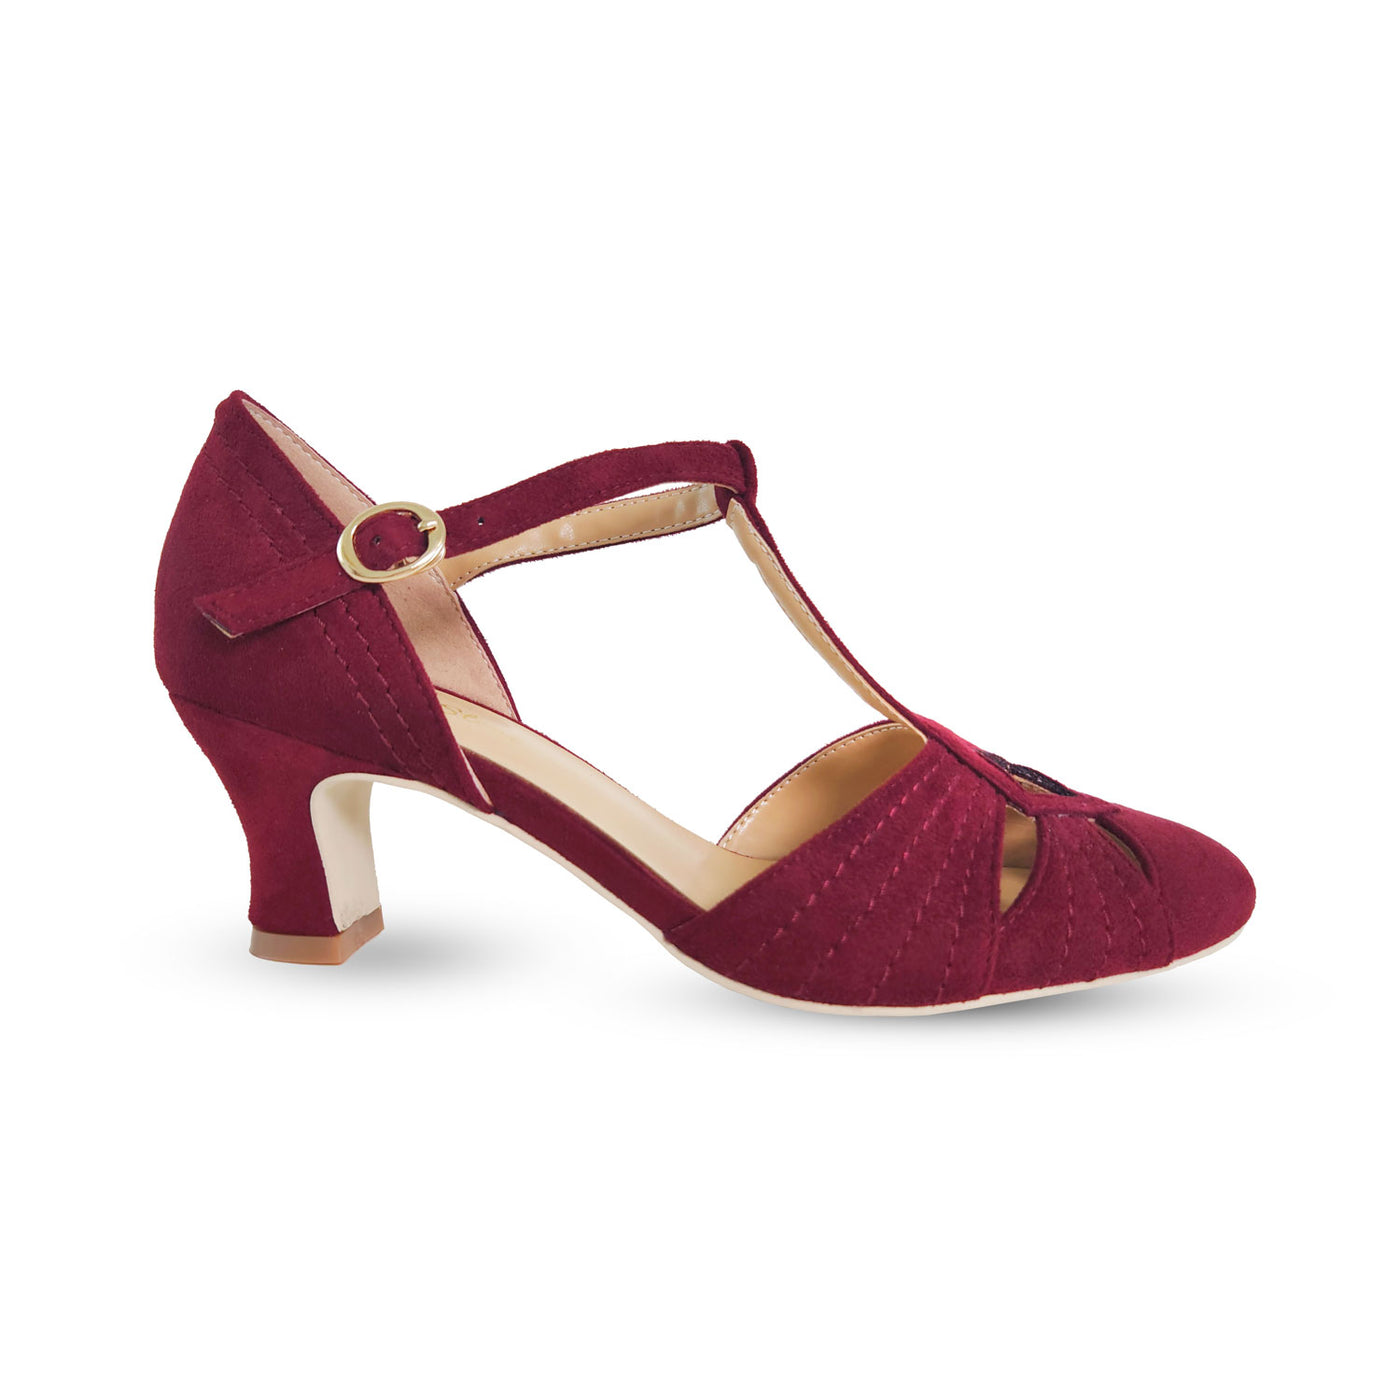 Charlie Stone Vintage Inspired heels Retro 1940’s 1950’s Style Ladies Shoes wine red vegan